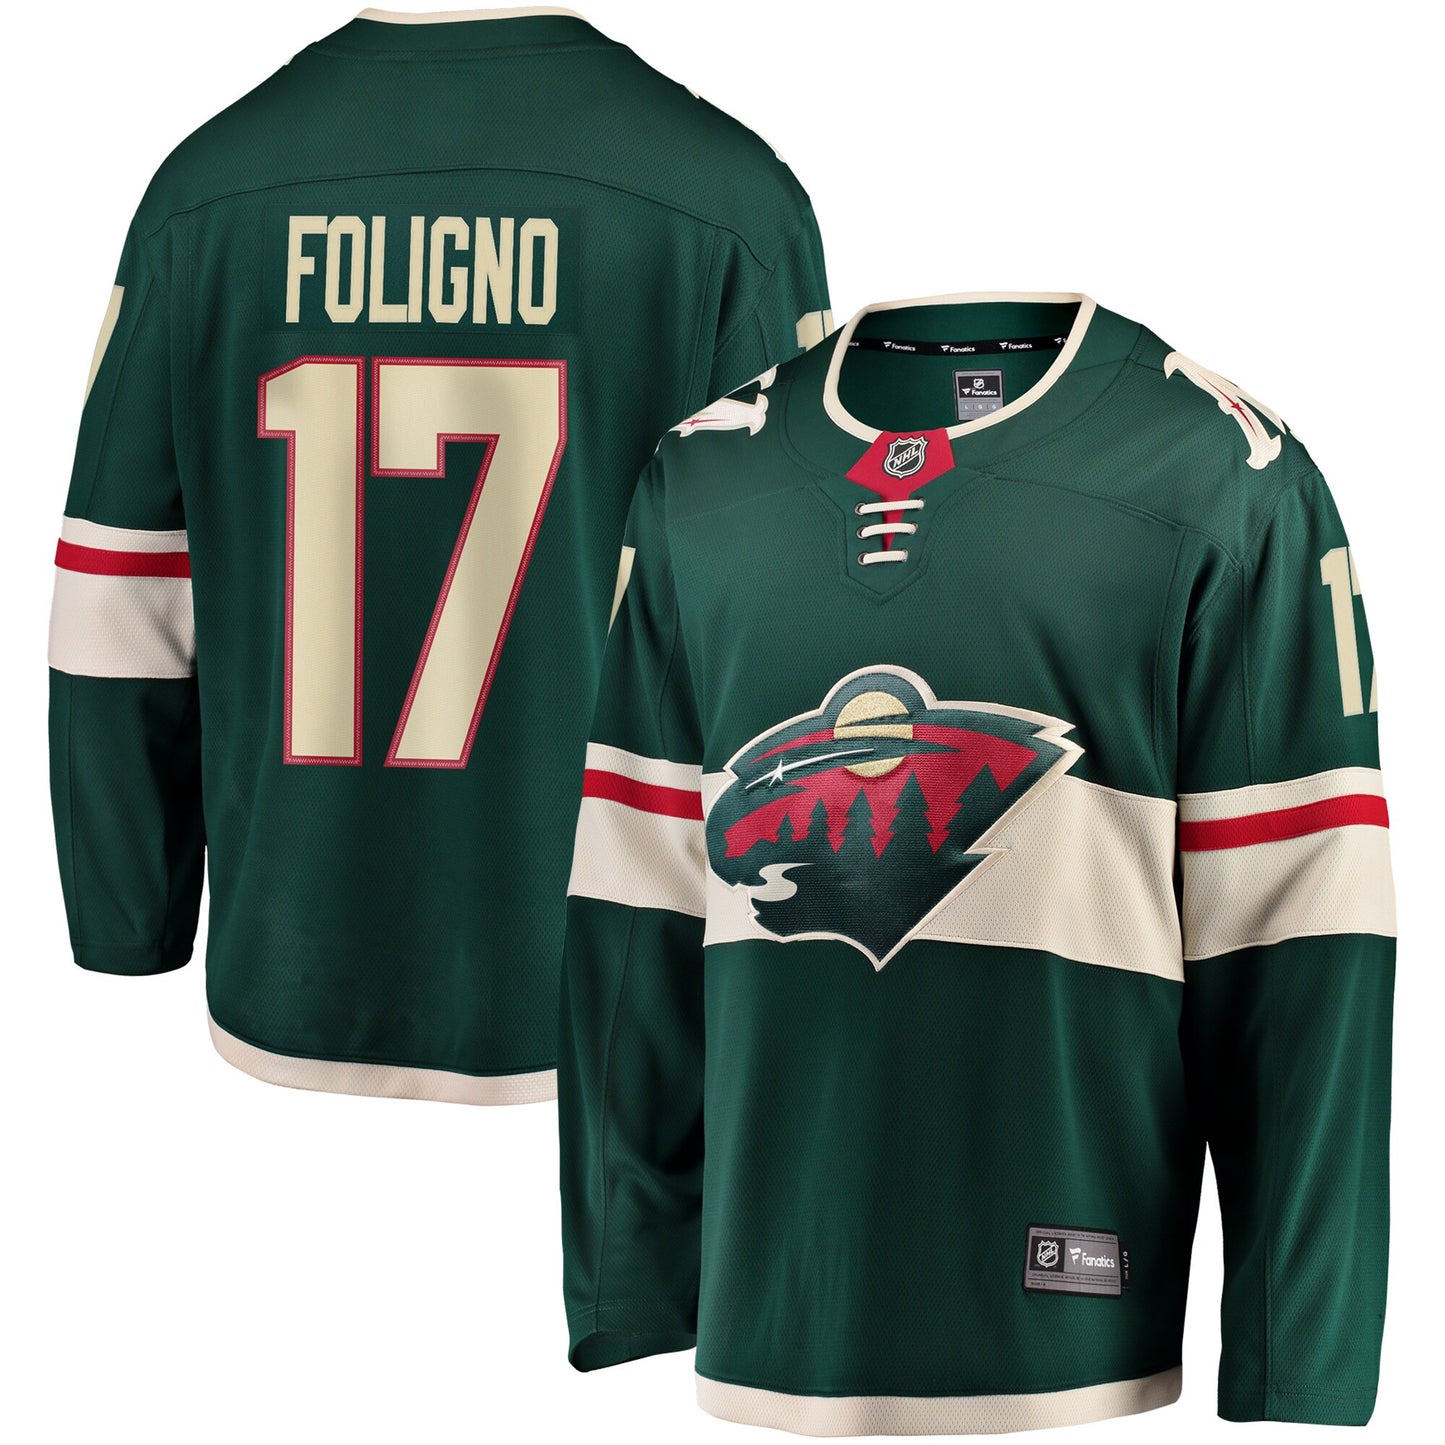 Marcus Foligno Minnesota Wild Fanatics Branded Breakaway Jersey - Green